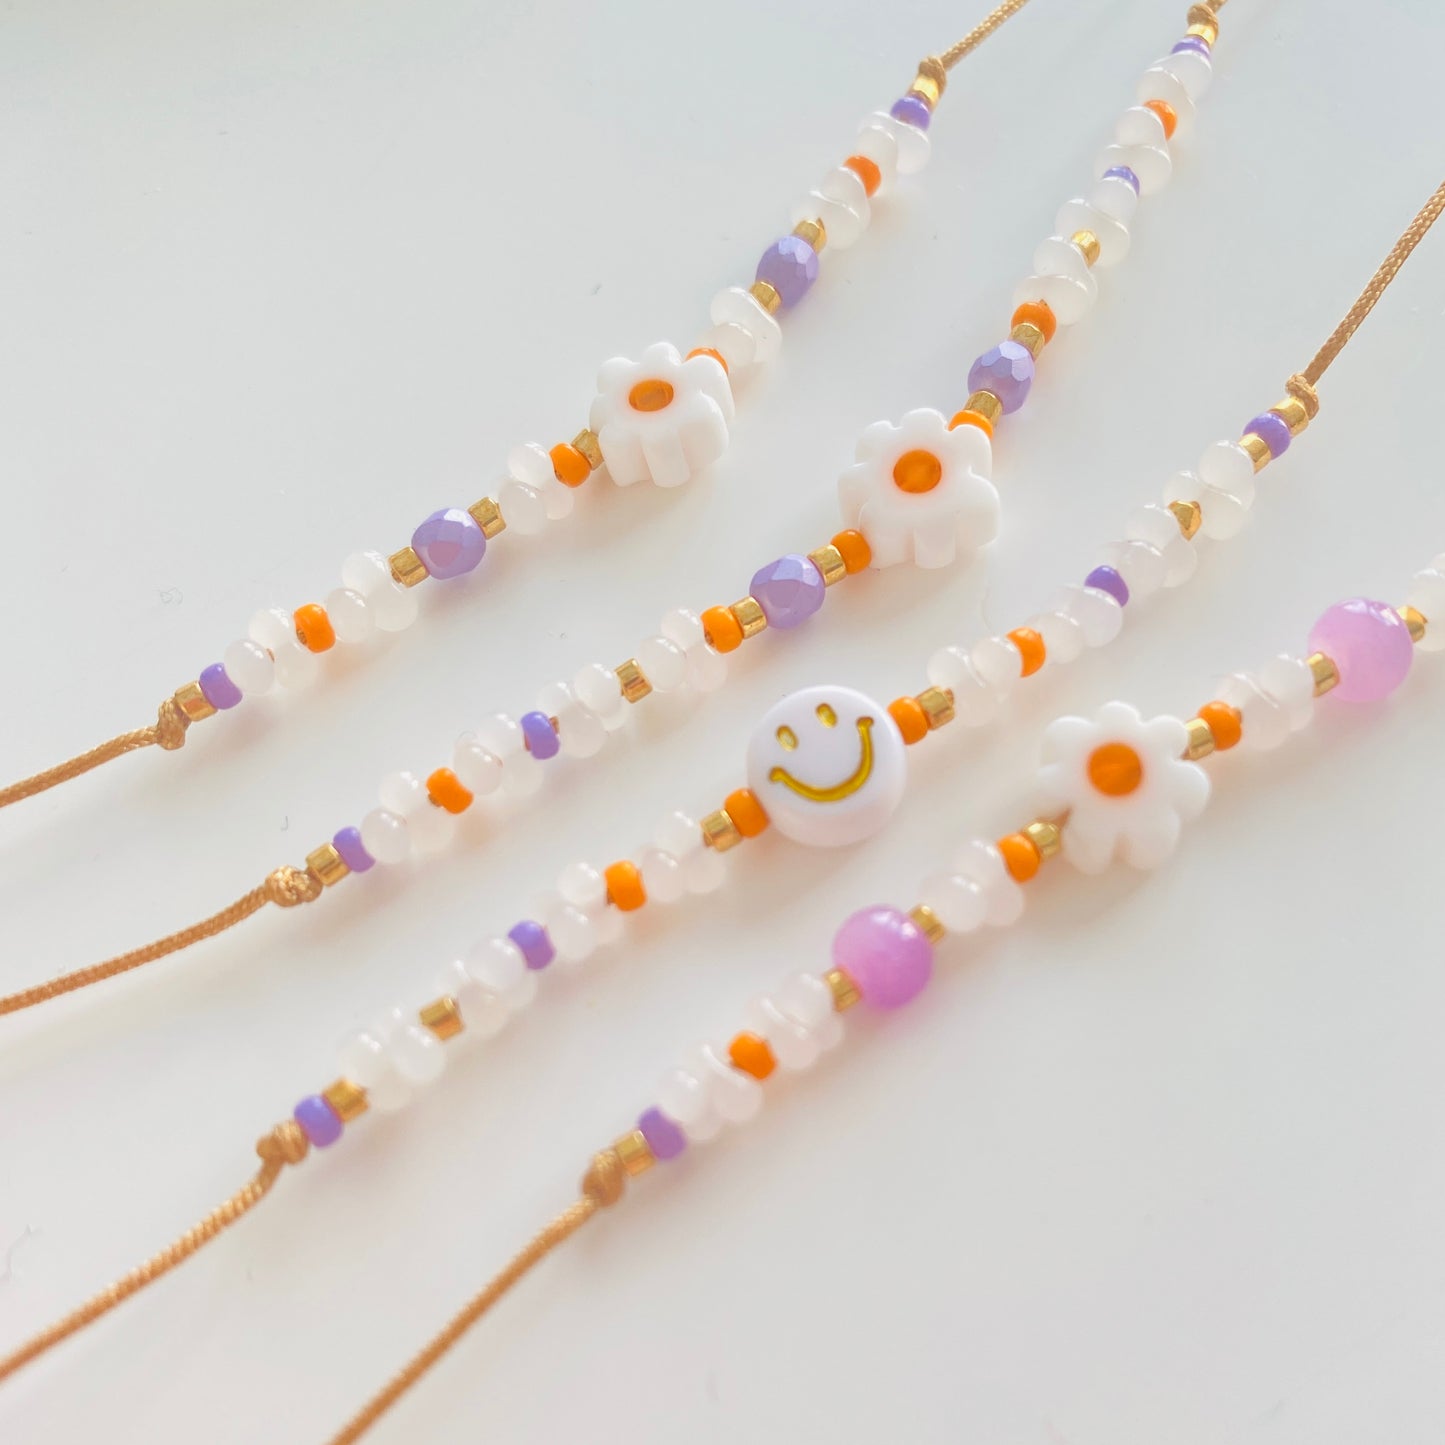 Strand of glass beads violet opal / 4mm / 200 pcs.